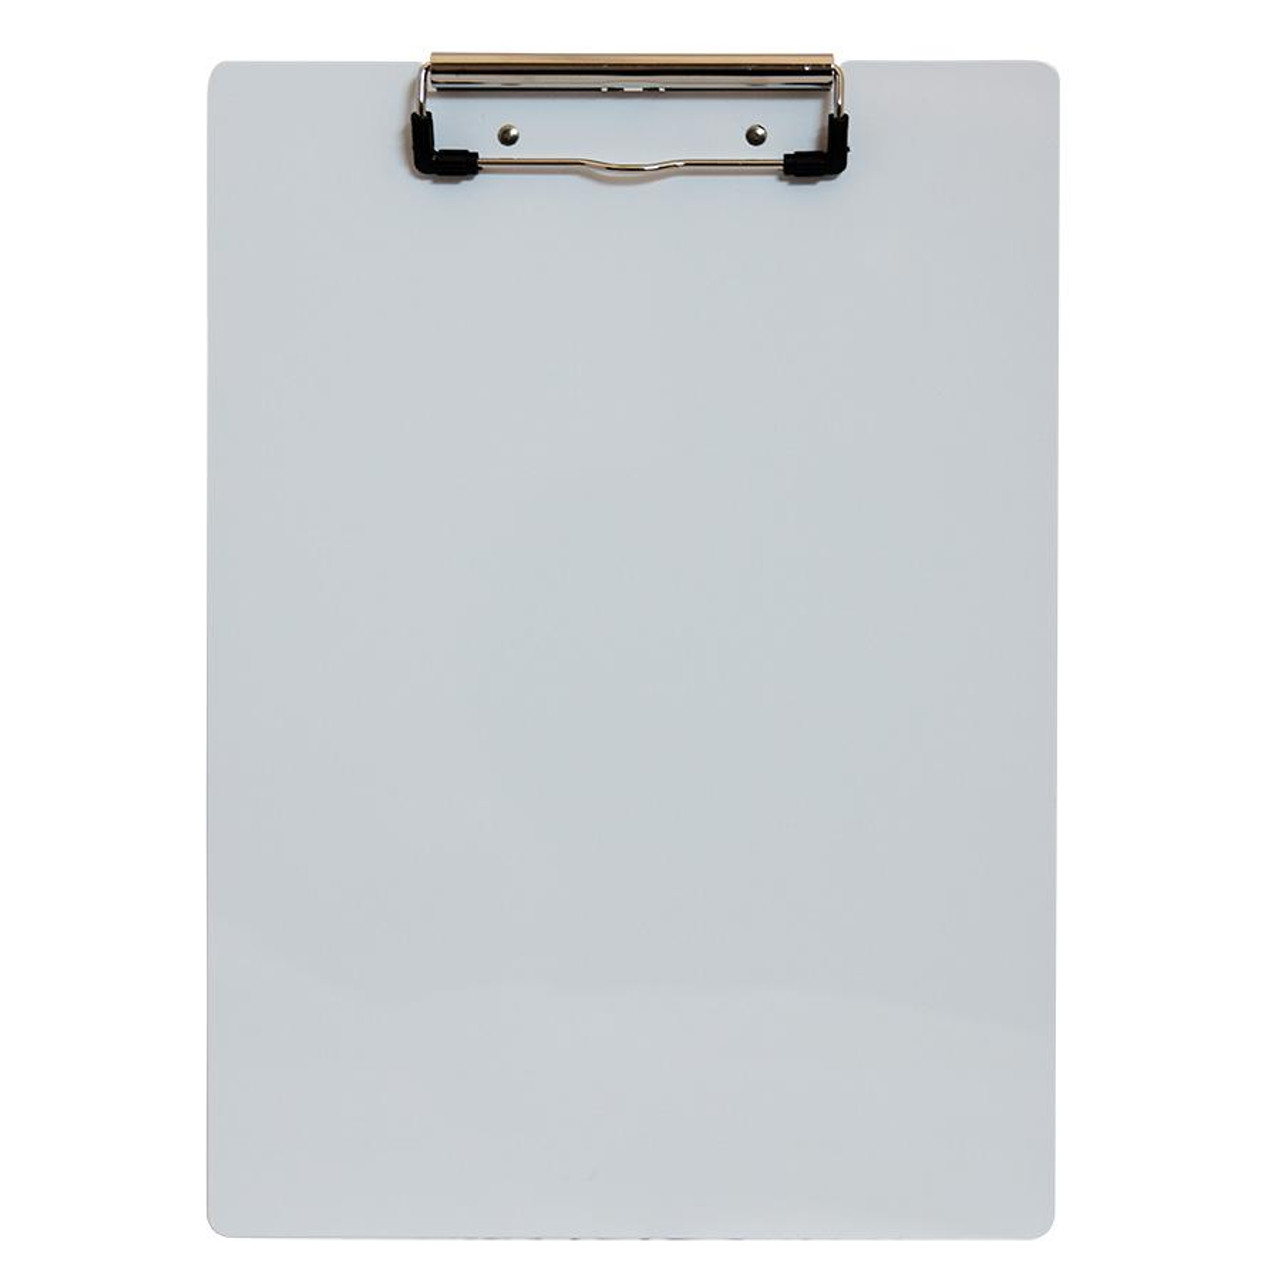 Saunders 21526 Clipboard, Letter/A4, 8.5x12 Paper Size, Low Profile Clip, White Aluminum